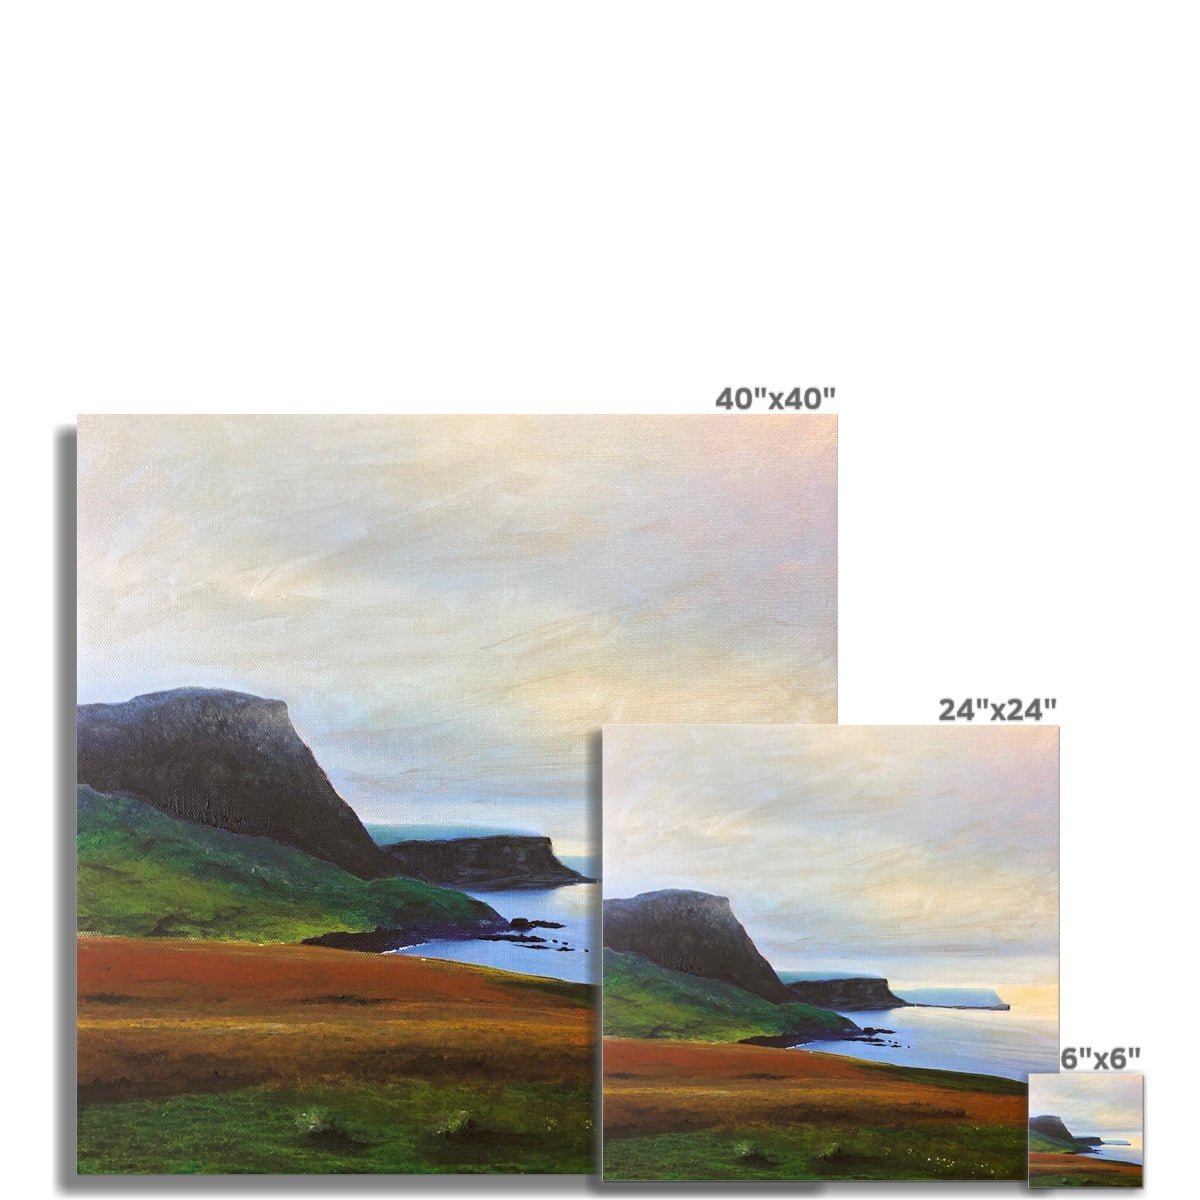 Neist Point Cliffs Skye Painting | Fine Art Prints From Scotland-Unframed Prints-Skye Art Gallery-Paintings, Prints, Homeware, Art Gifts From Scotland By Scottish Artist Kevin Hunter